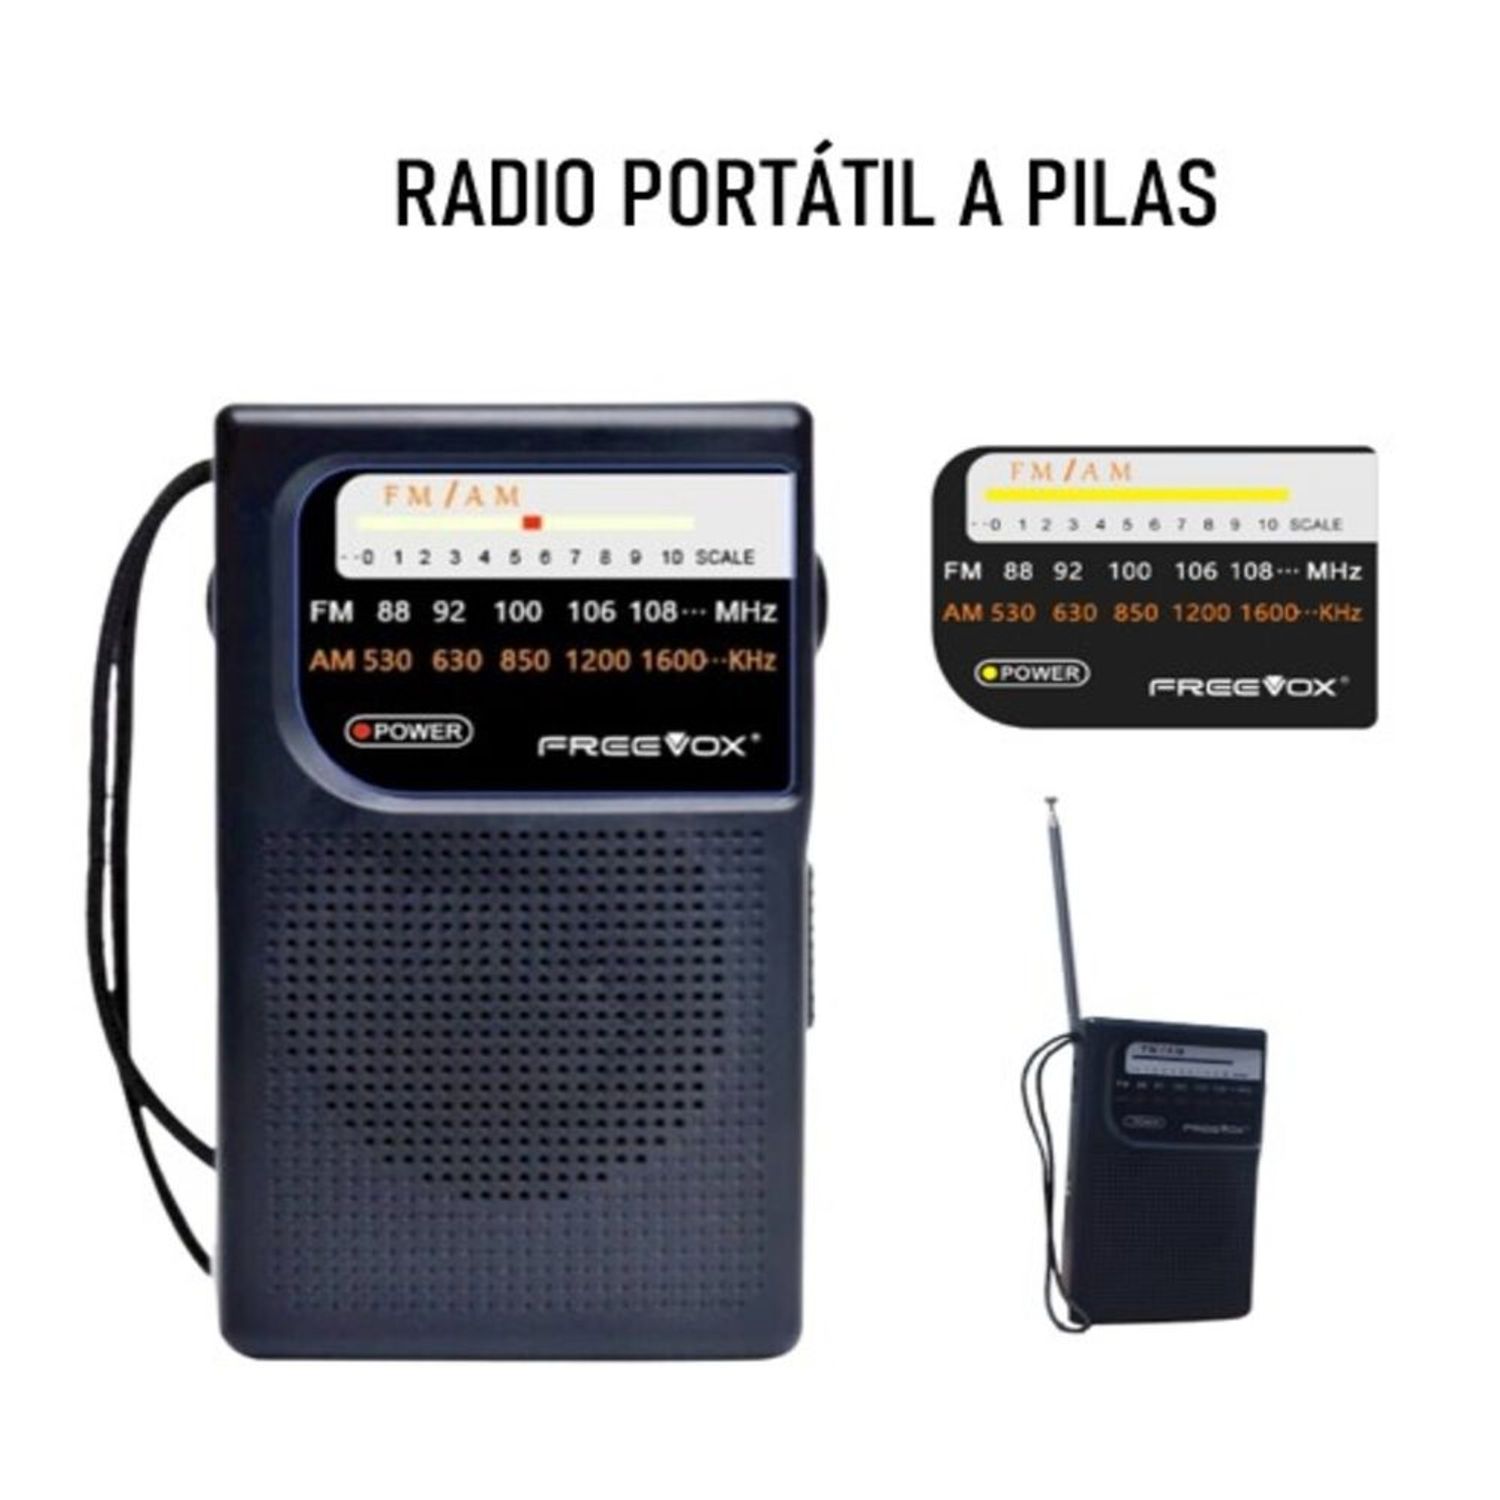 Radio portátil AM FM, radio de bolsillo personal Peru